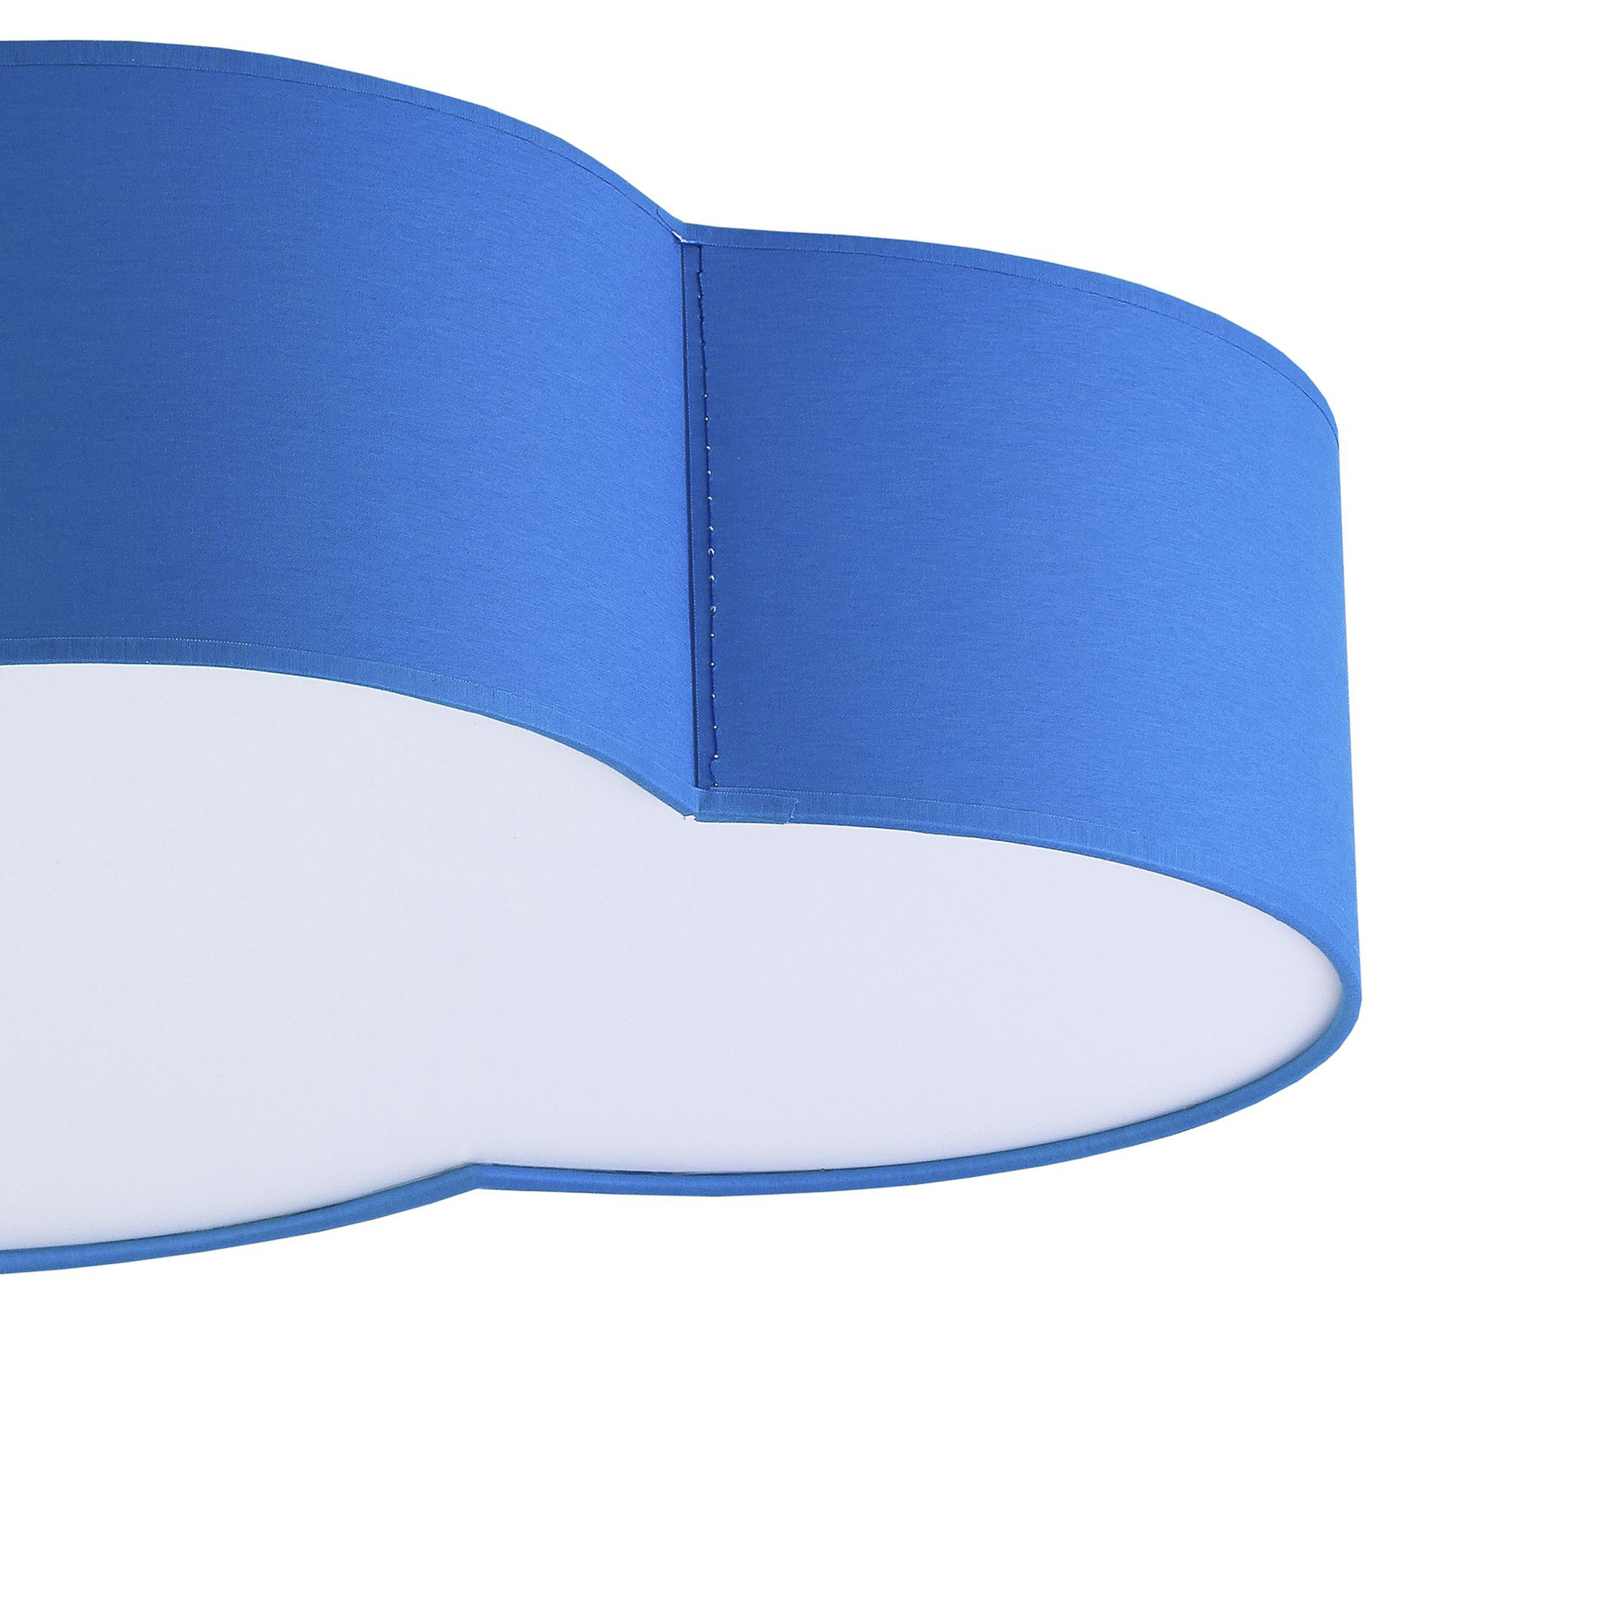 Lubinis šviestuvas "Cloud", tekstilė, 62 x 45 cm, mėlyna